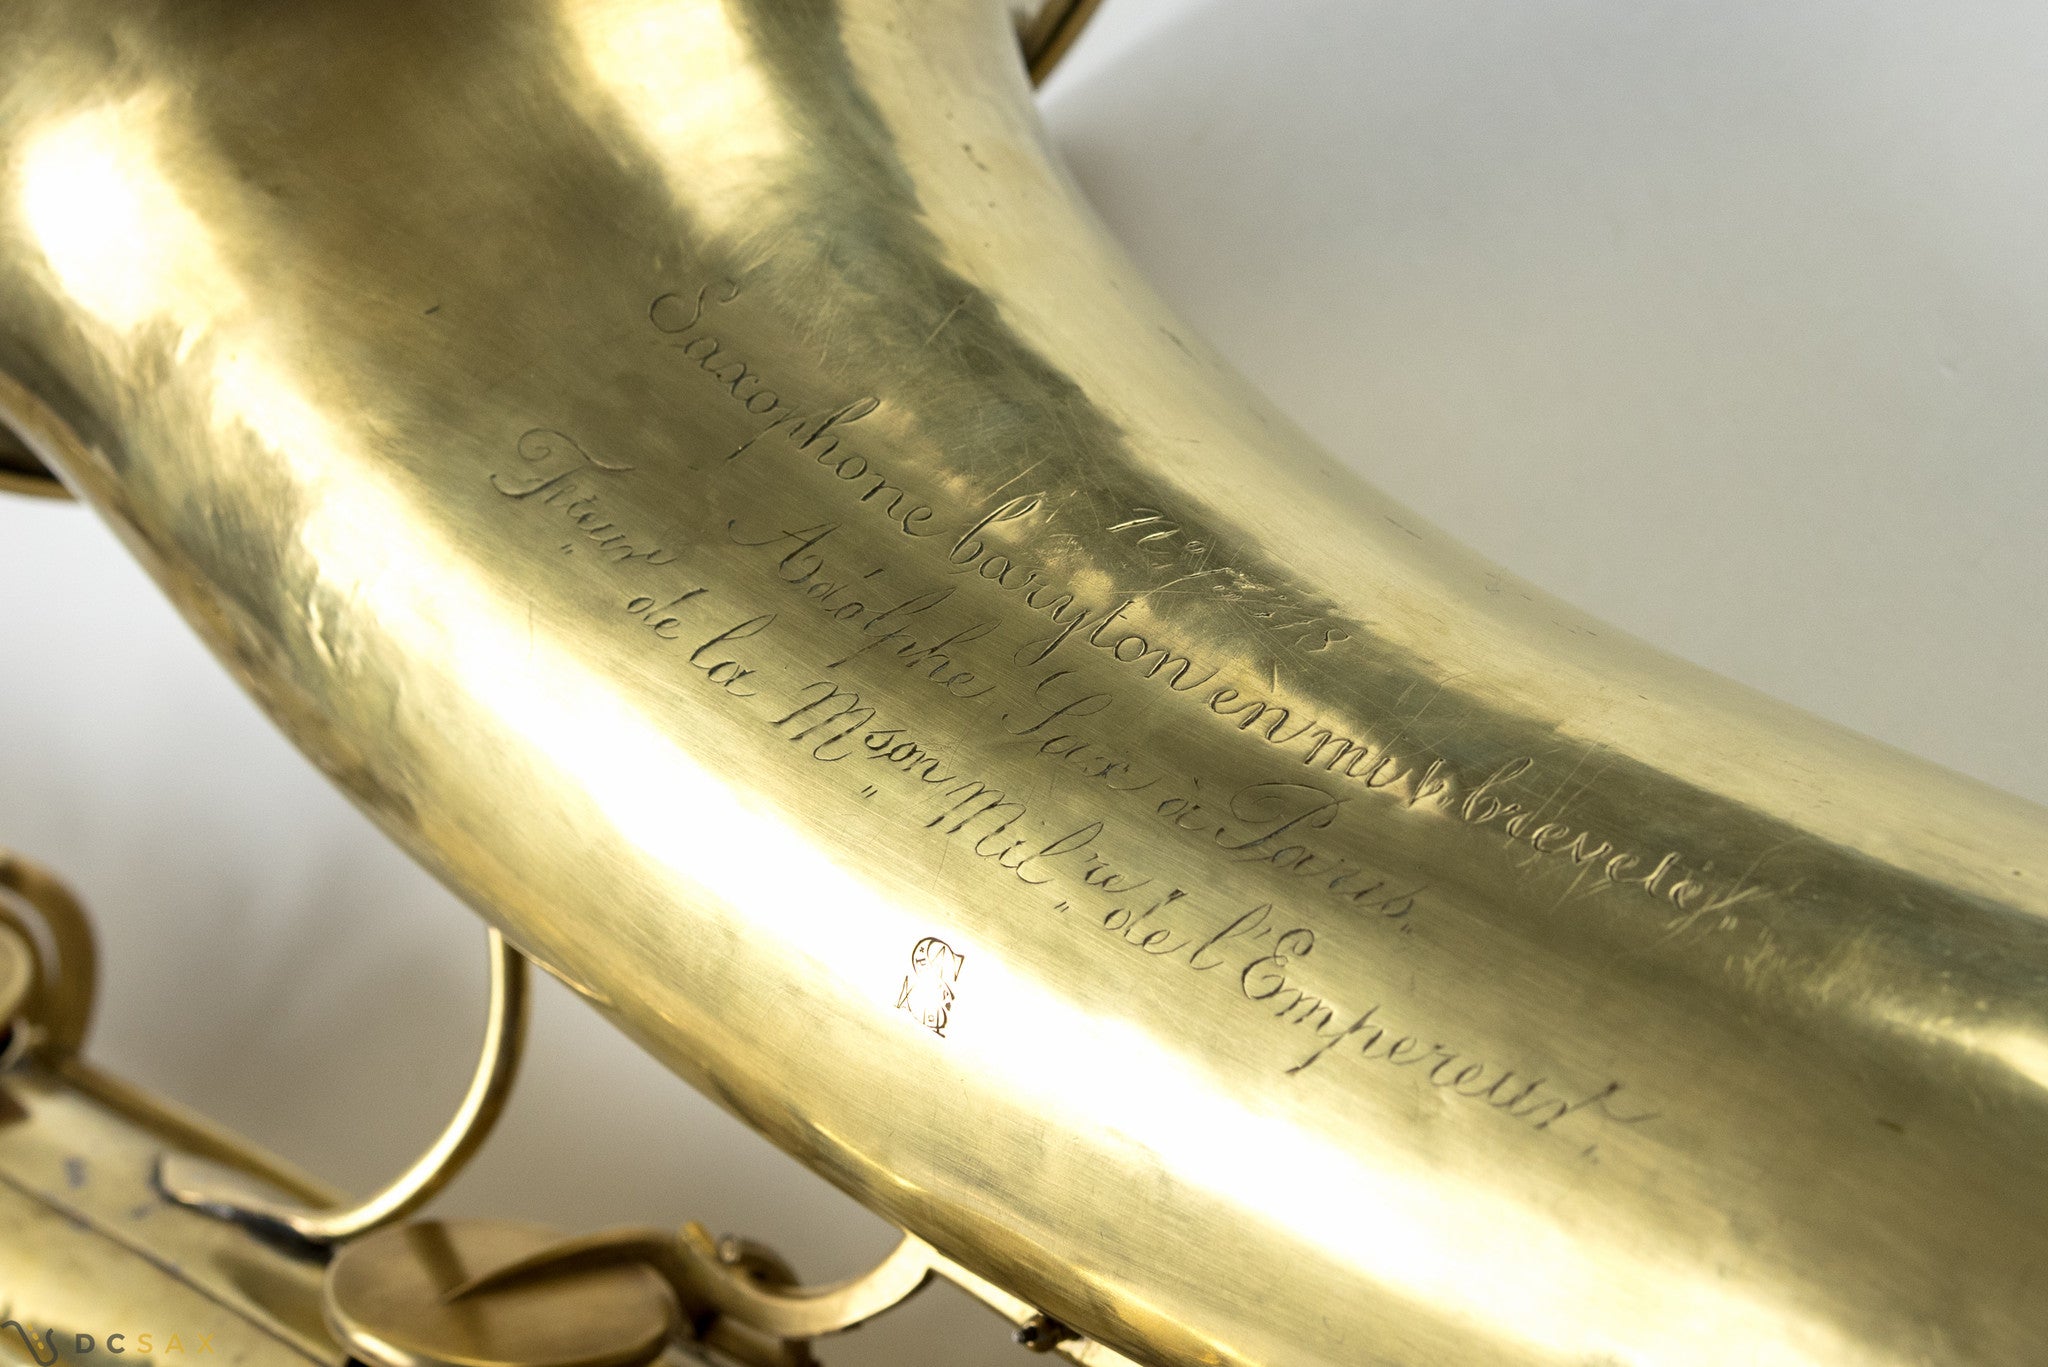 1855 Adolphe Sax Baritone Saxophone